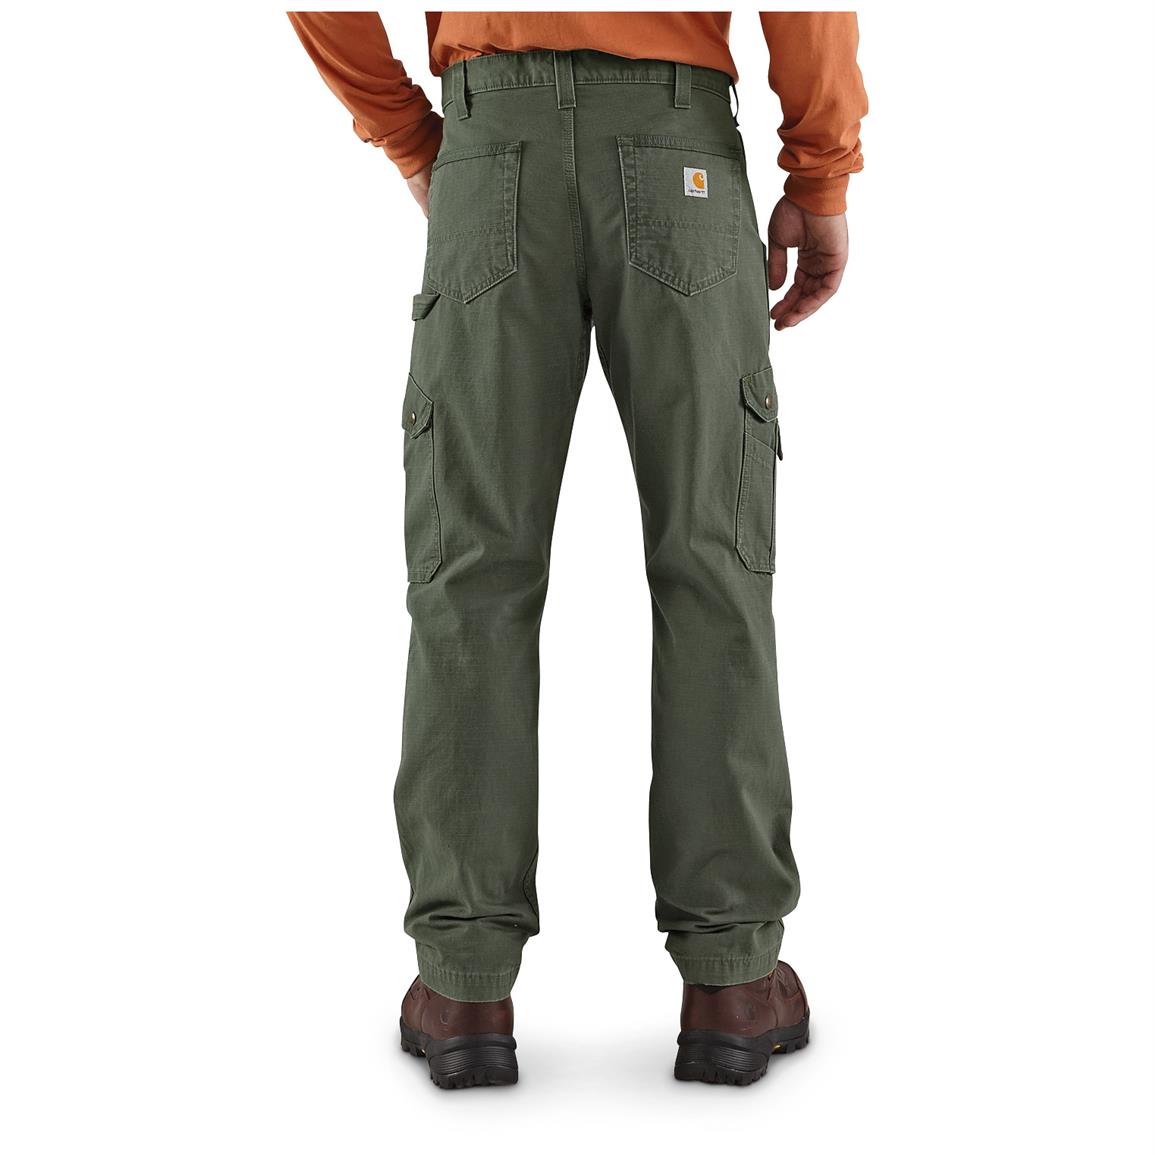 Carhartt Men's Cargo Work Pants - 655008, Jeans & Pants at Sportsman's ...